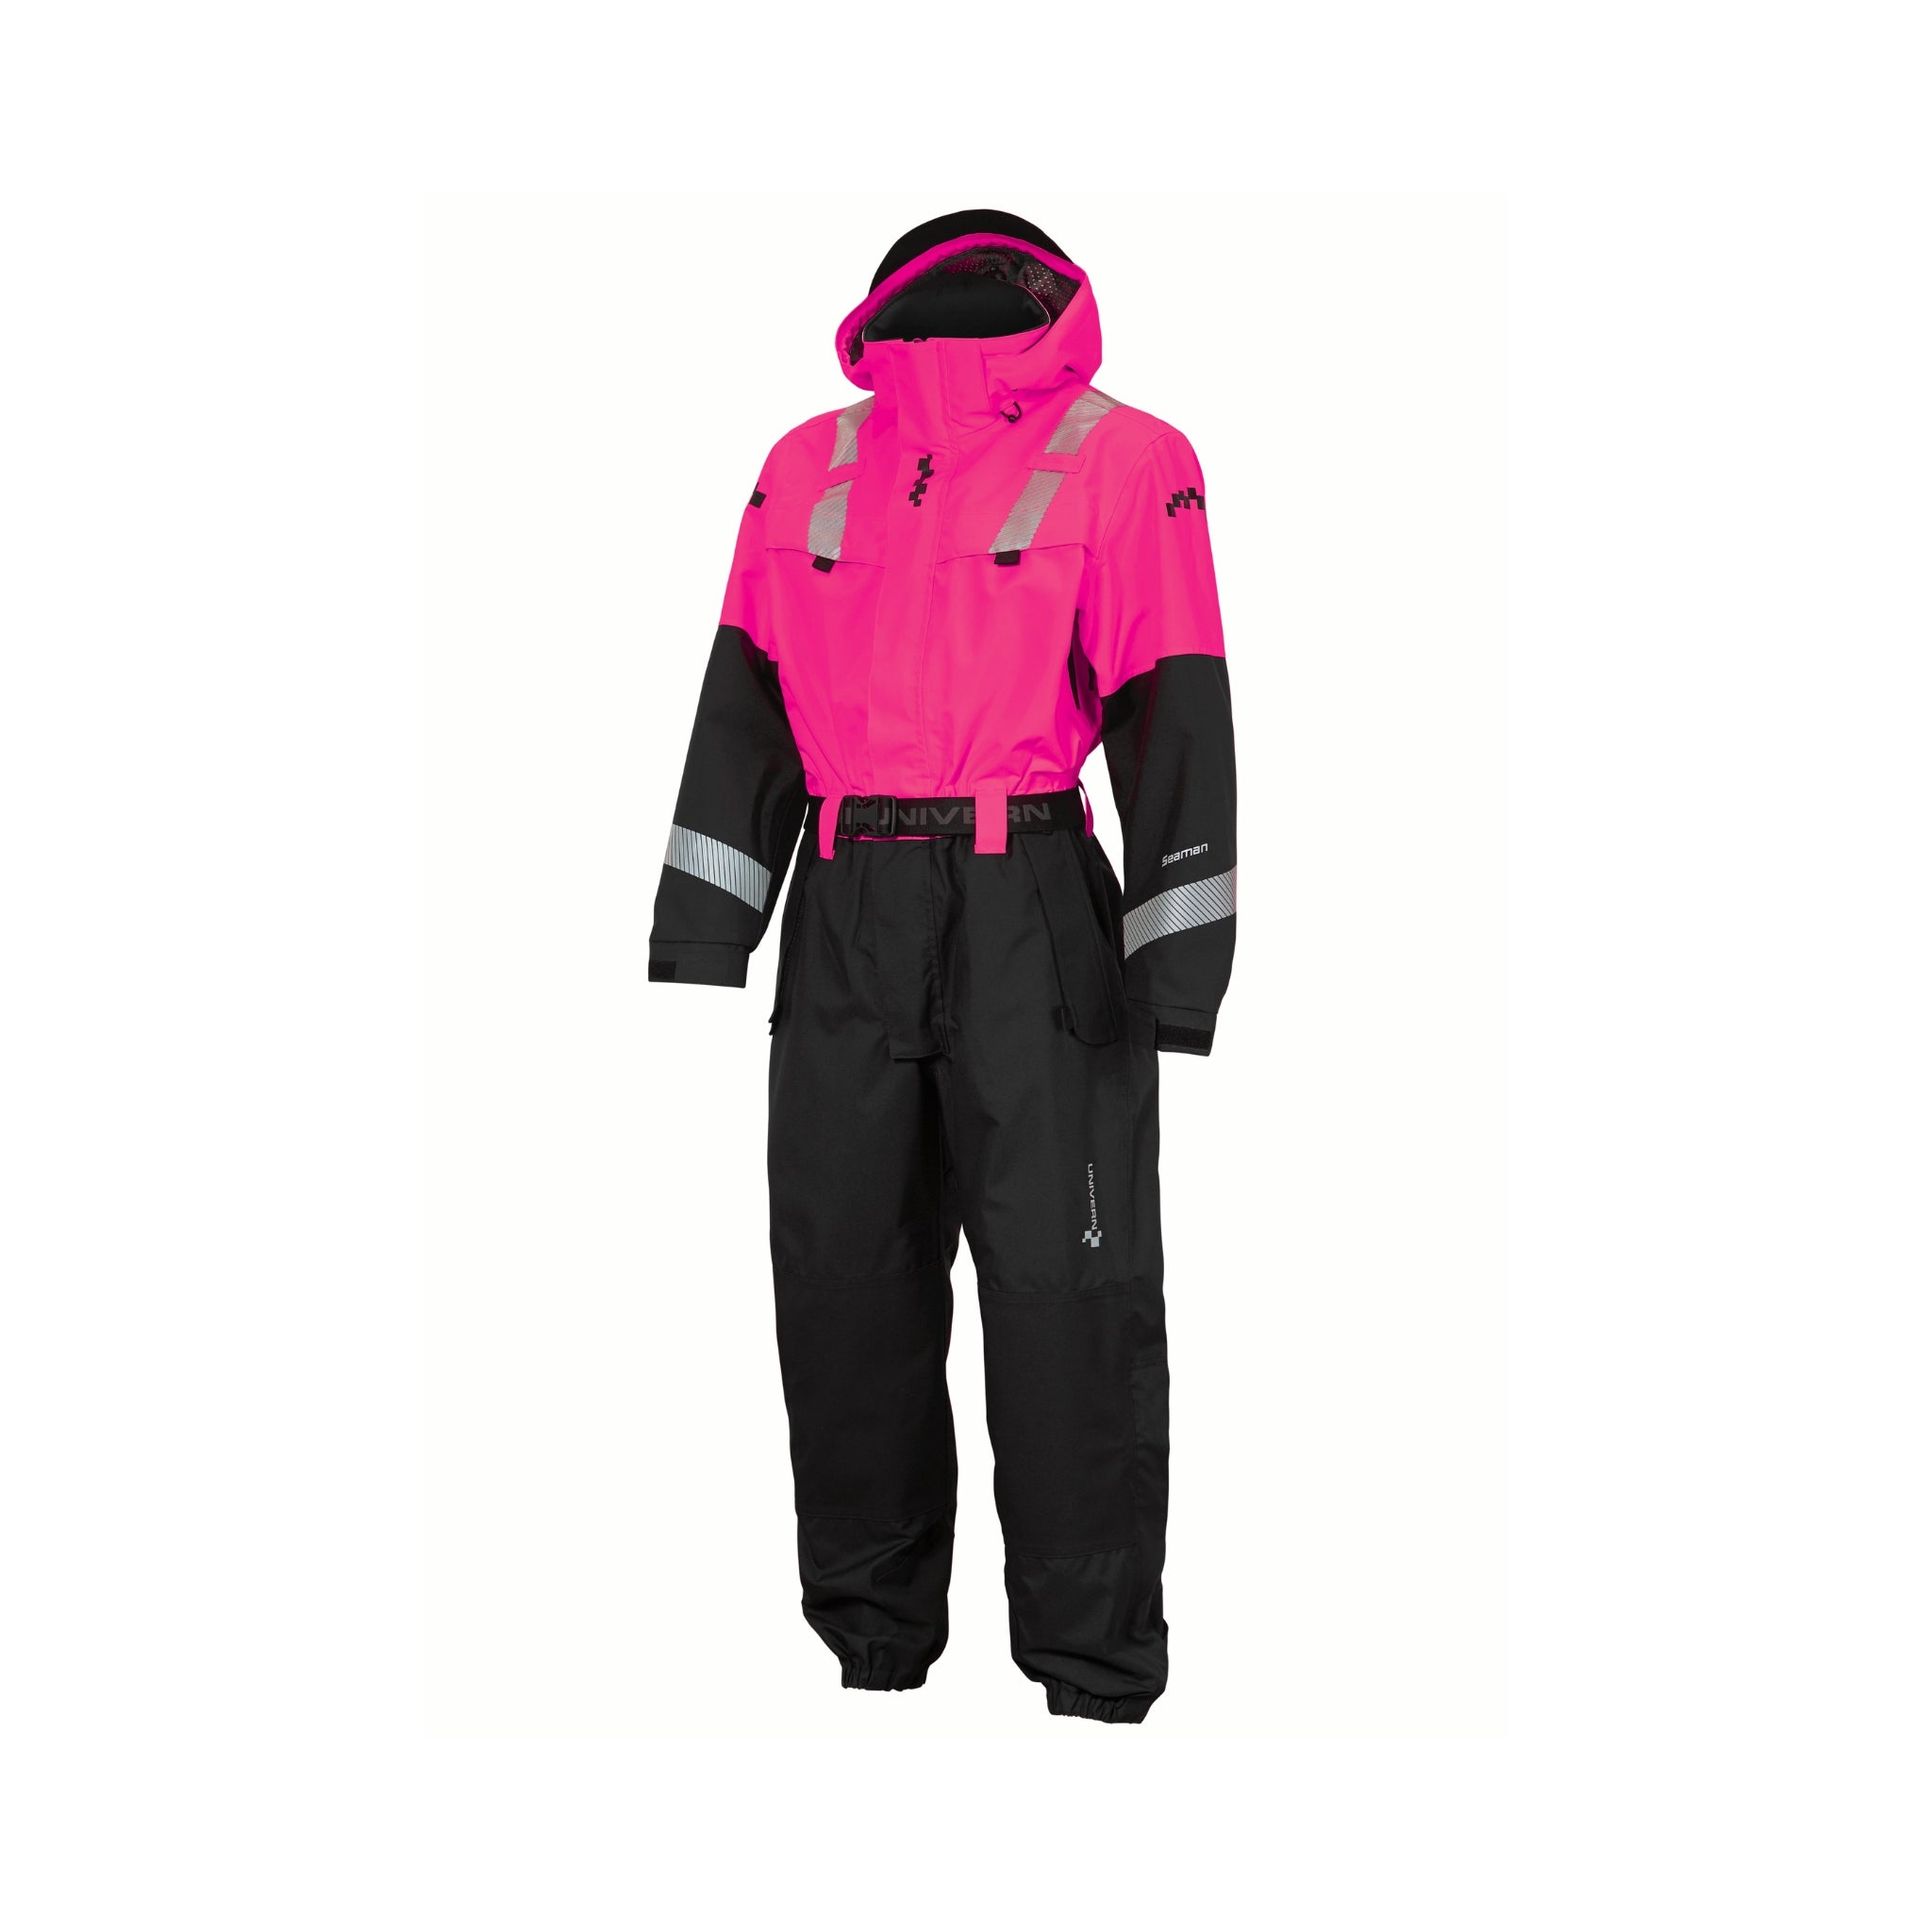 Allværsdress 6565-0423 Protec 2.0 Seaman Project Pink